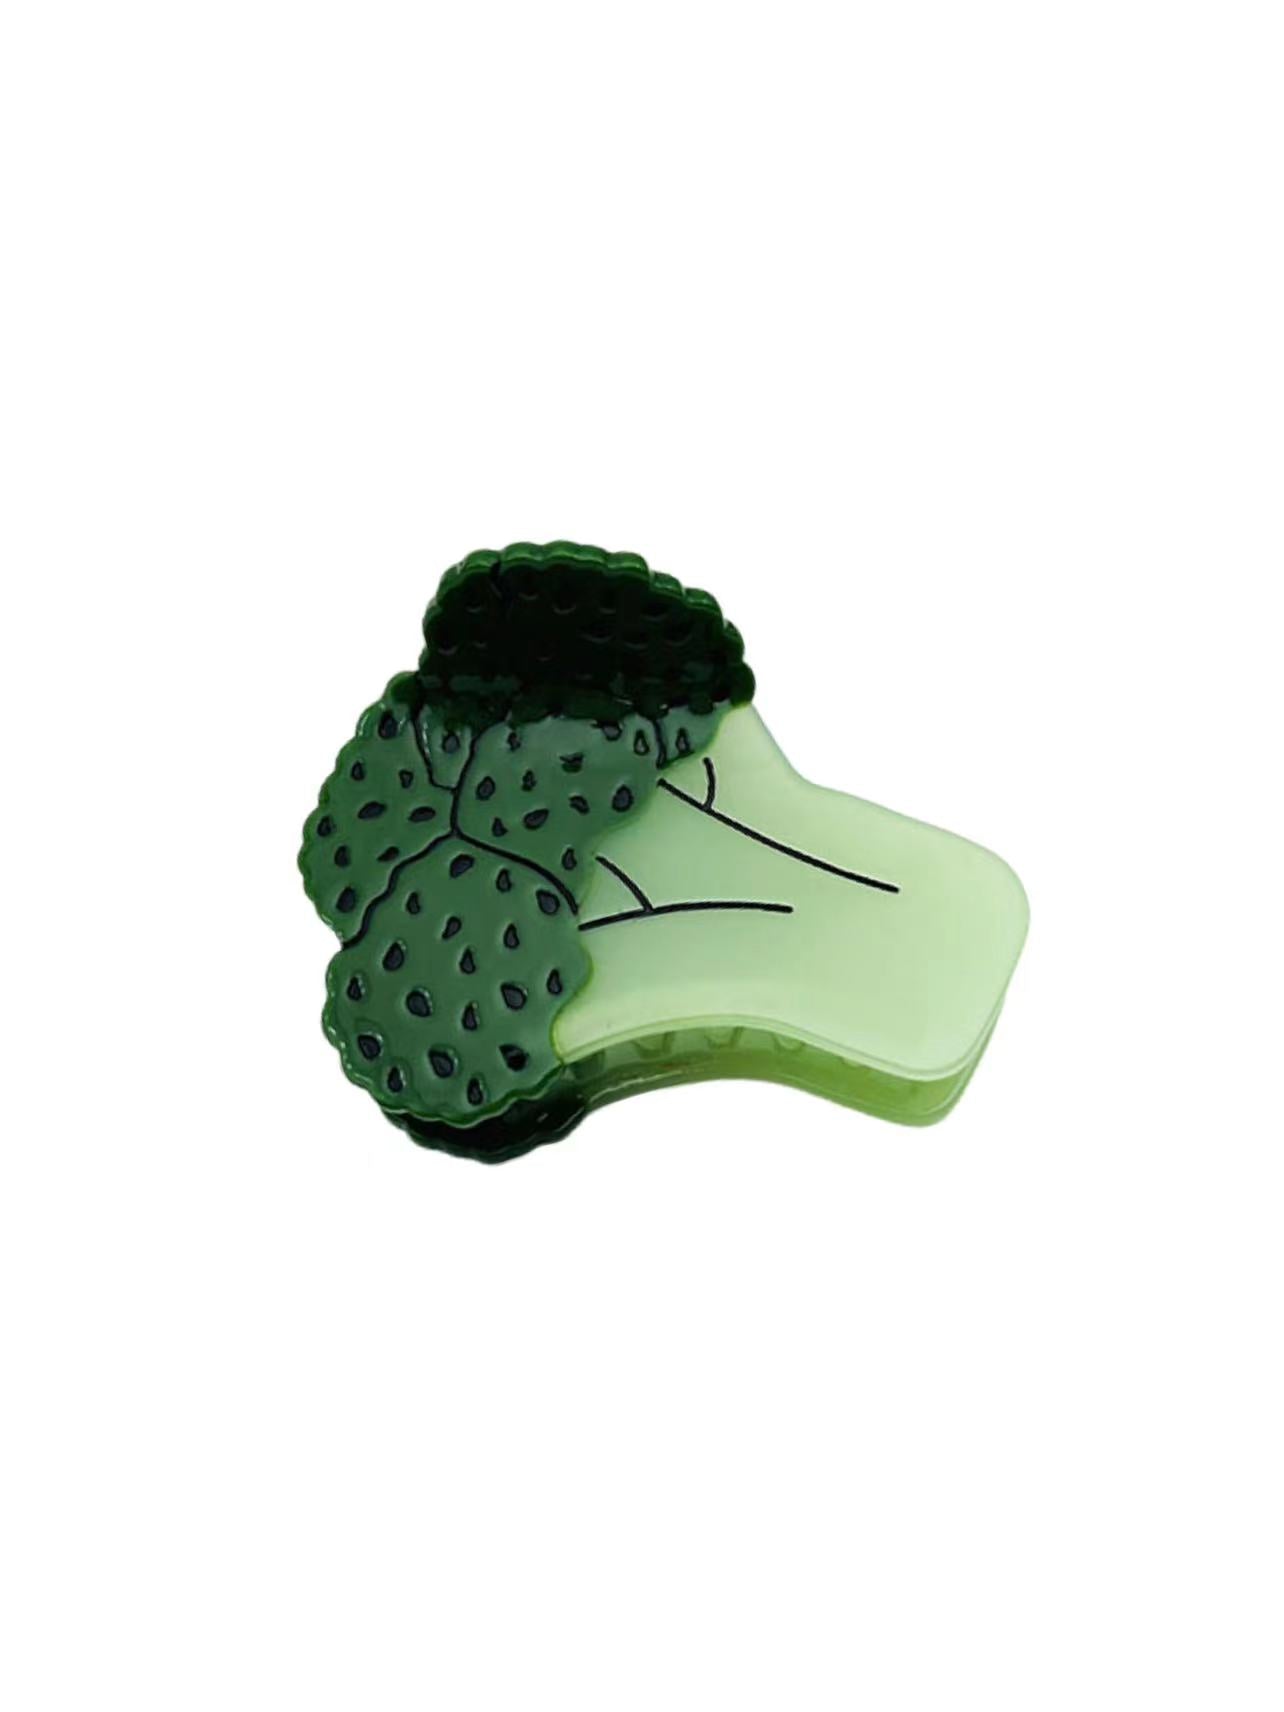 Broccoli hair claw clip